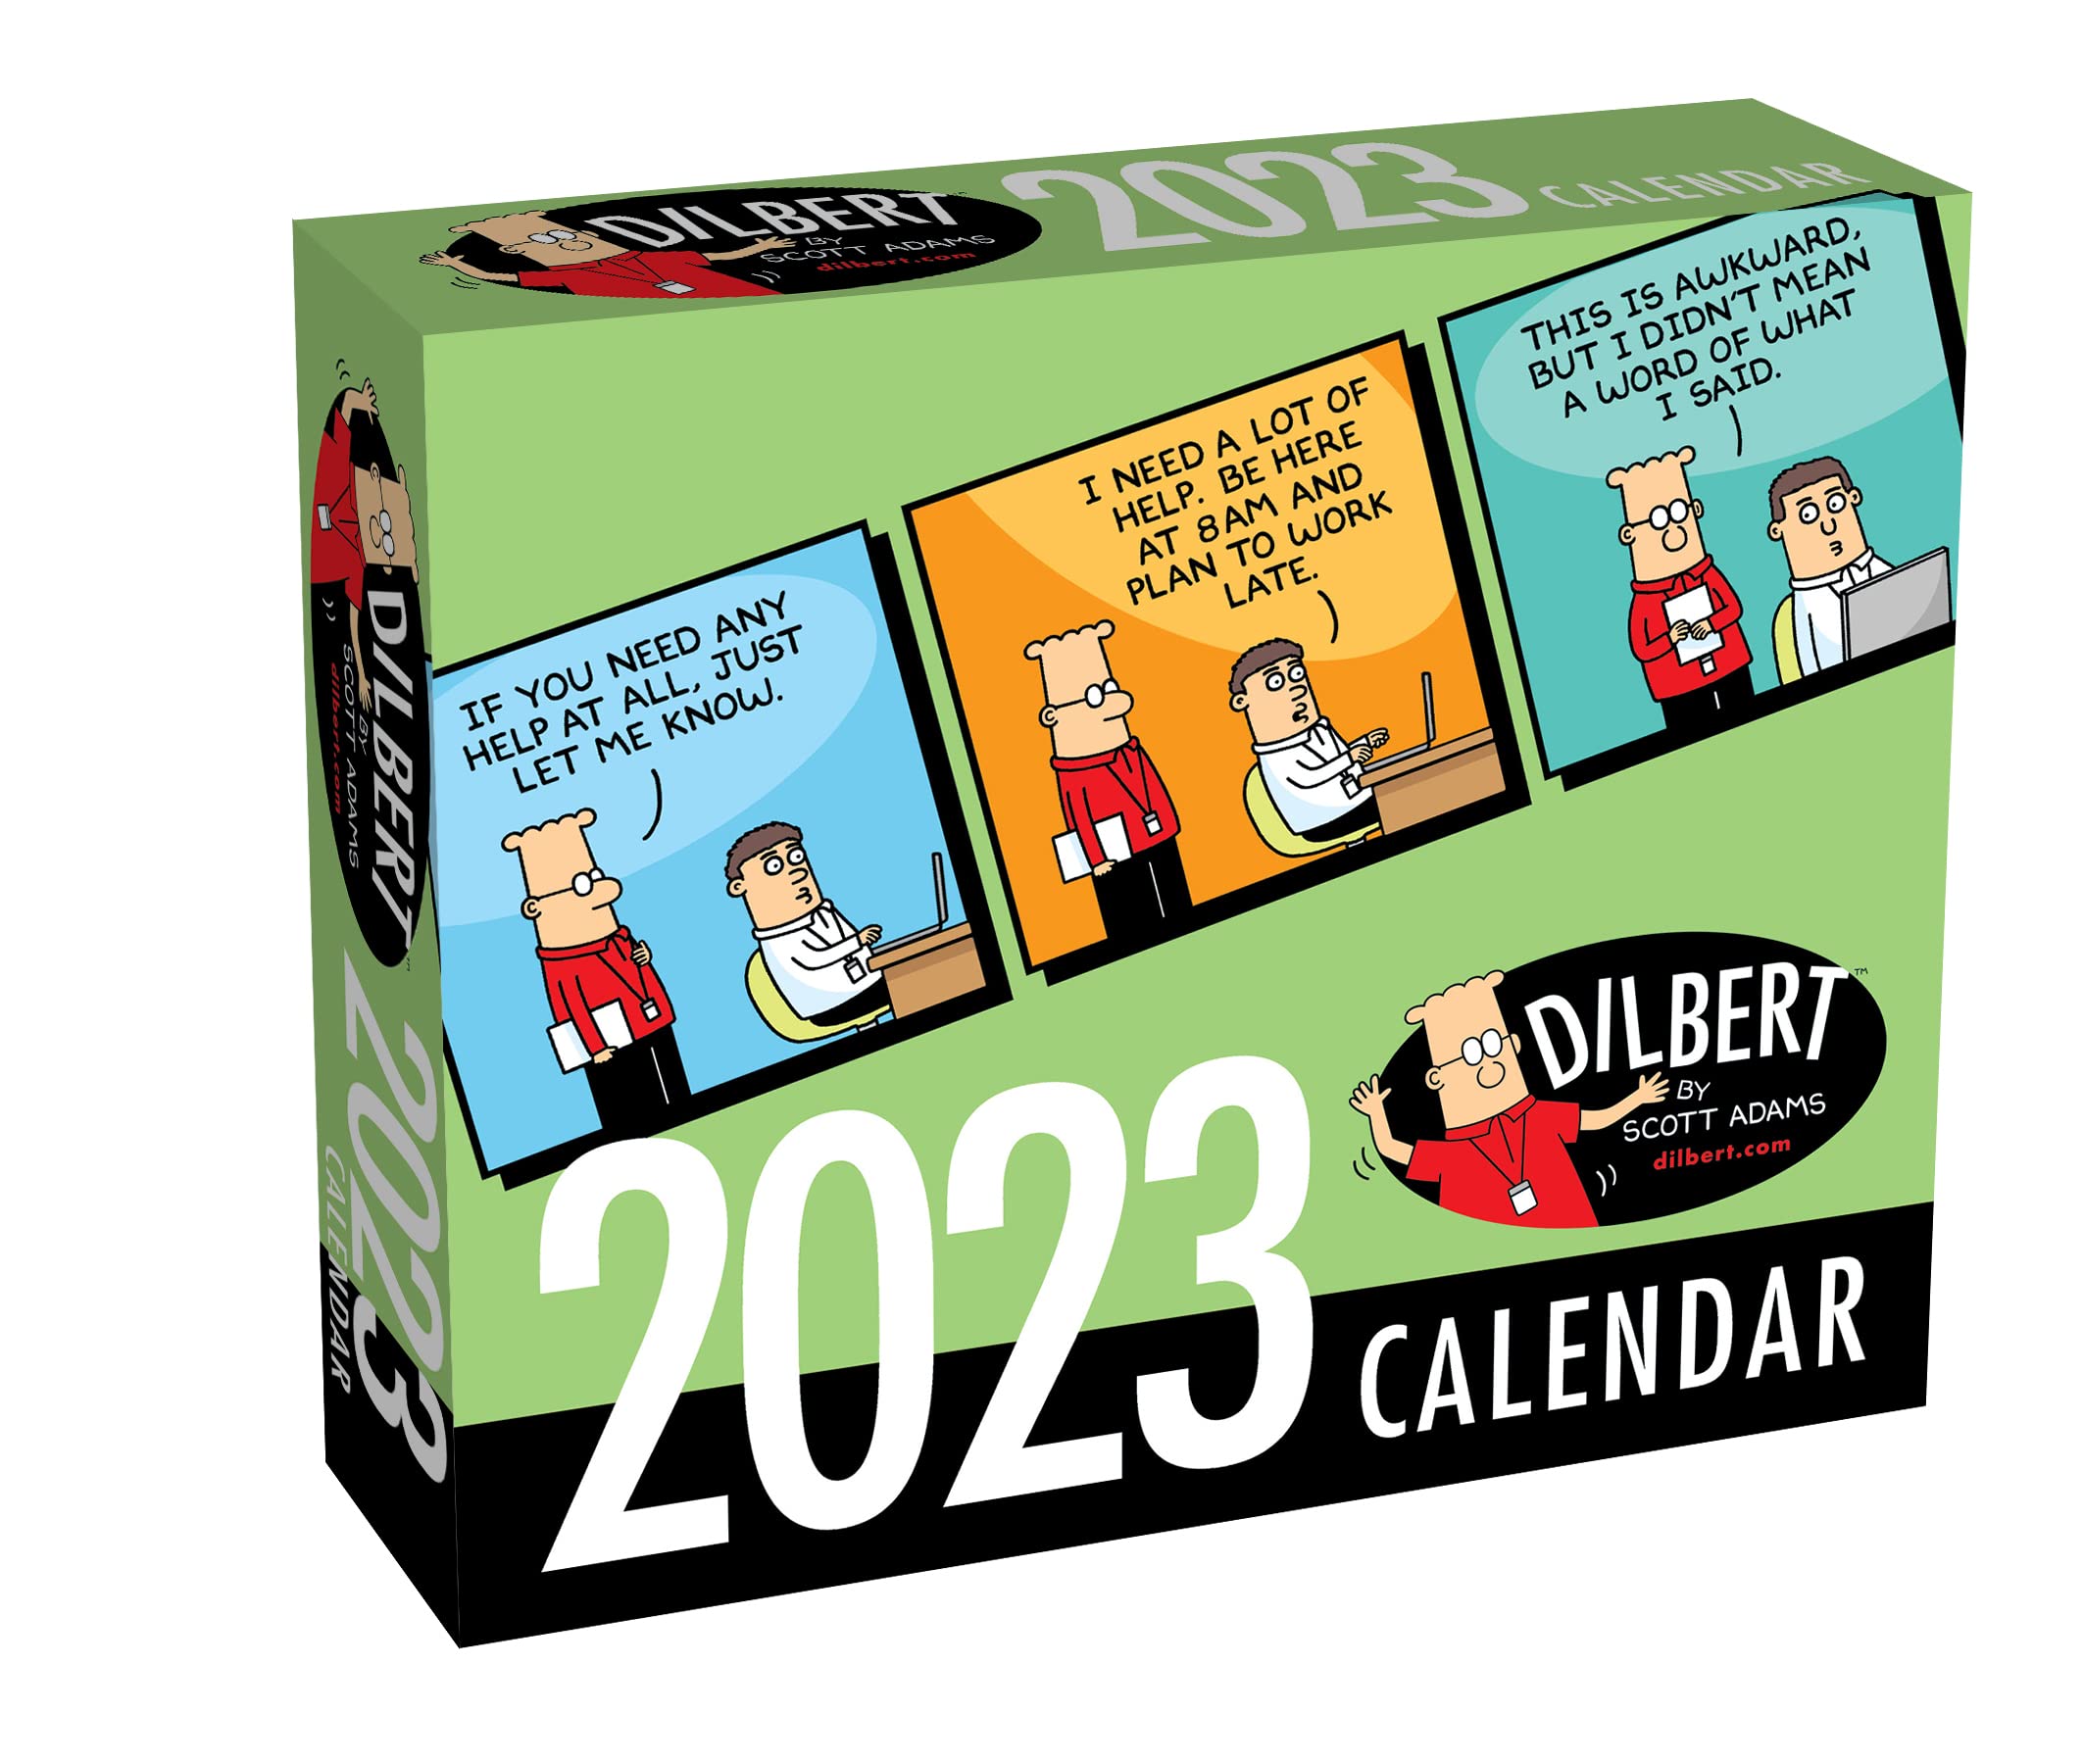 Mua Dilbert 2023 DaytoDay Calendar trên Amazon Nhật chính hãng 2022